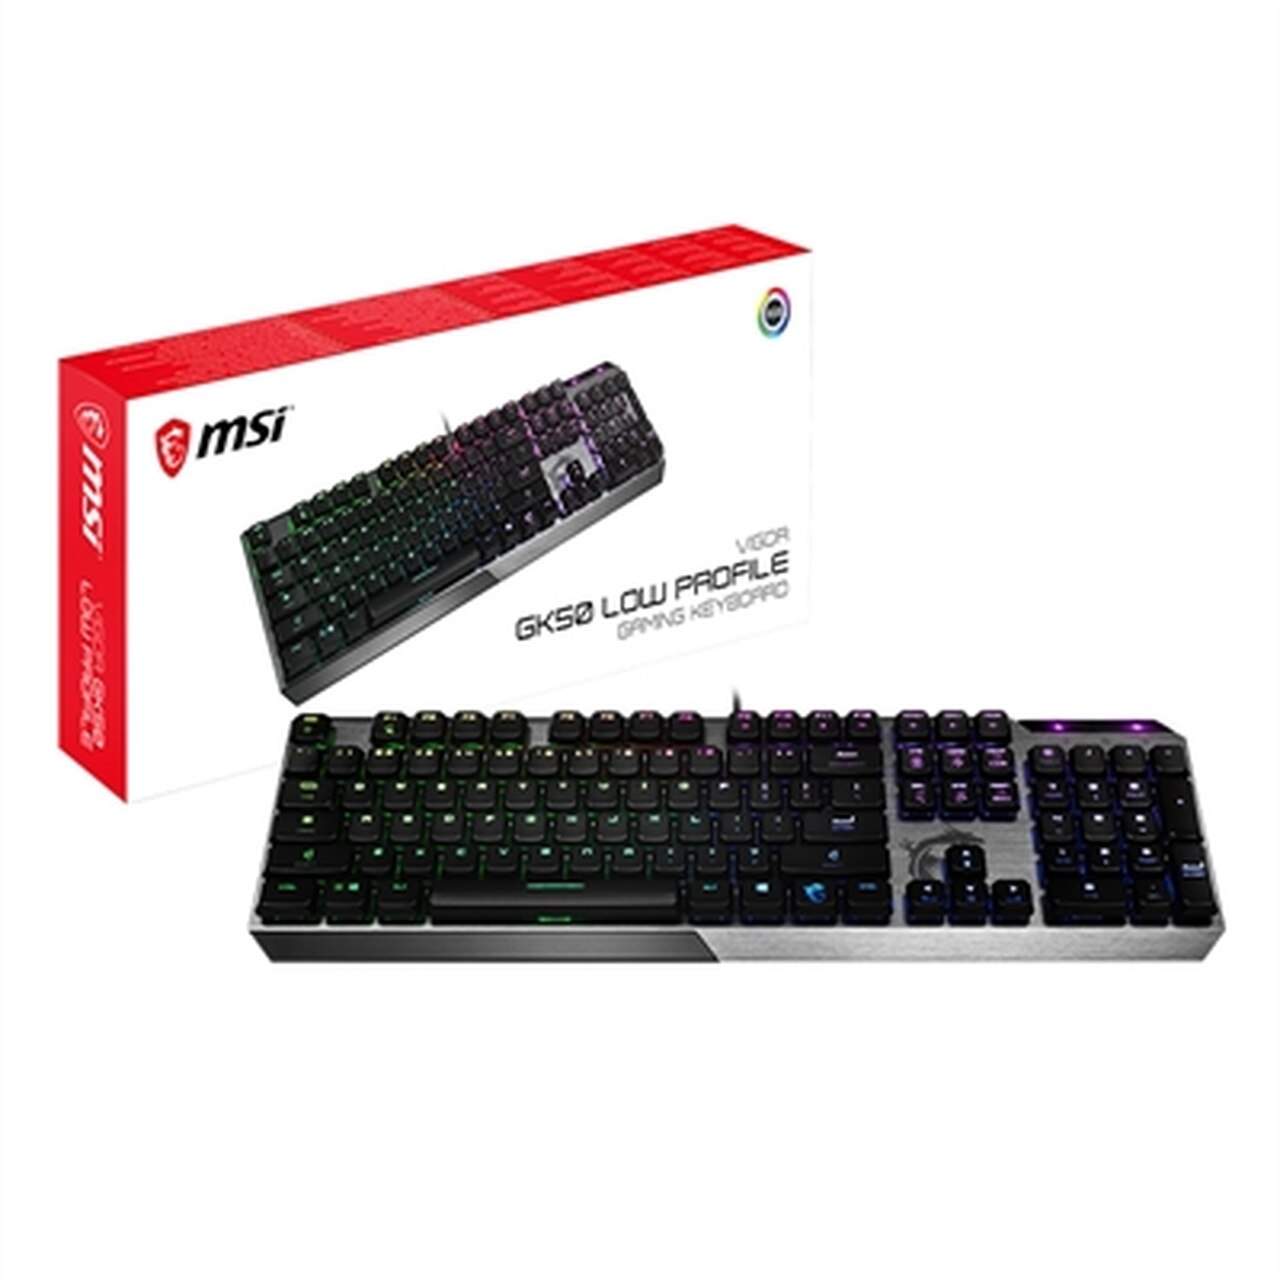 MSI Vigor GK50 Low Profile Gaming Keyboard - image 1 of 3